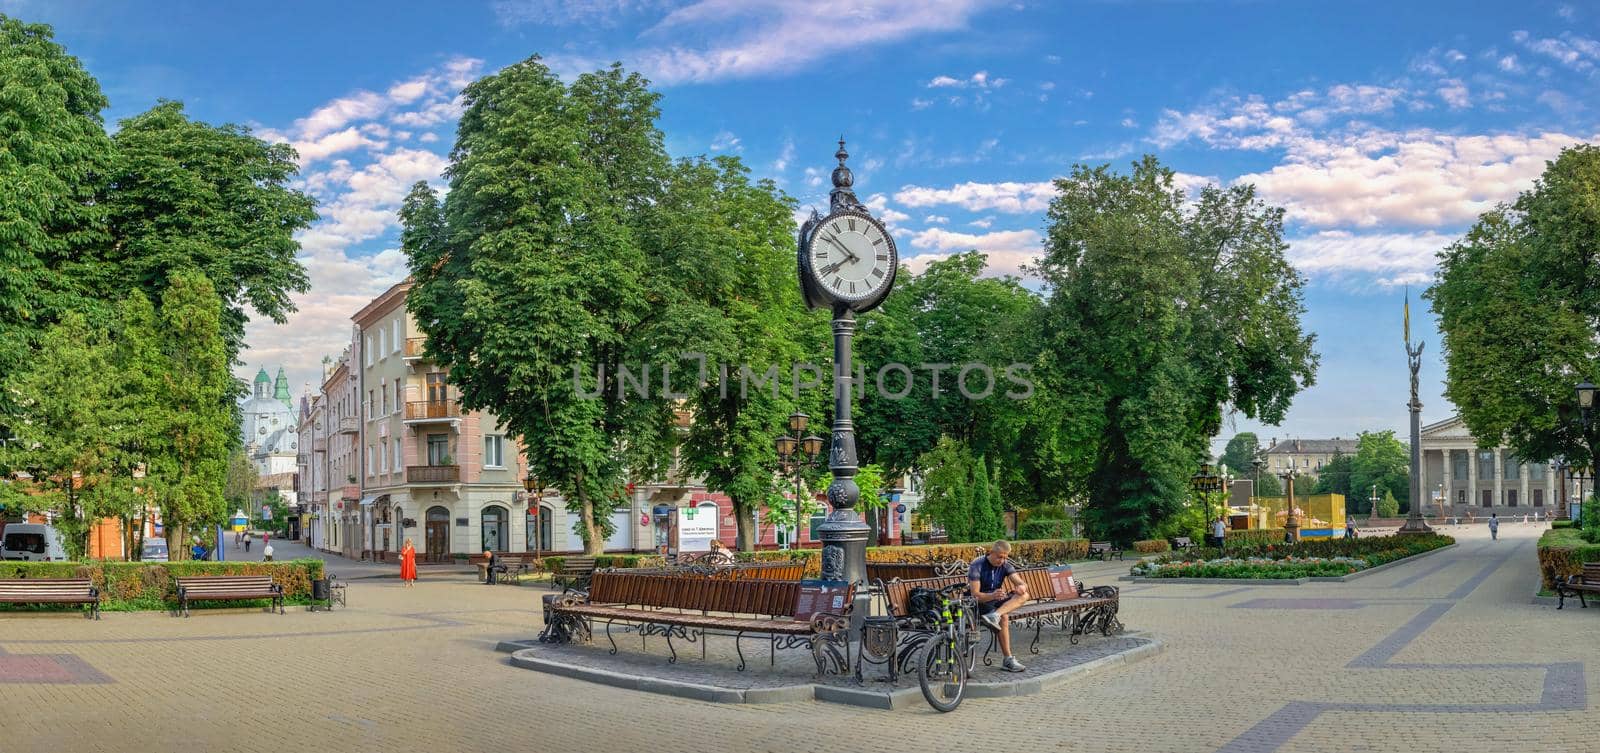 Taras Shevchenko Boulevard in Ternopil, Ukraine by Multipedia